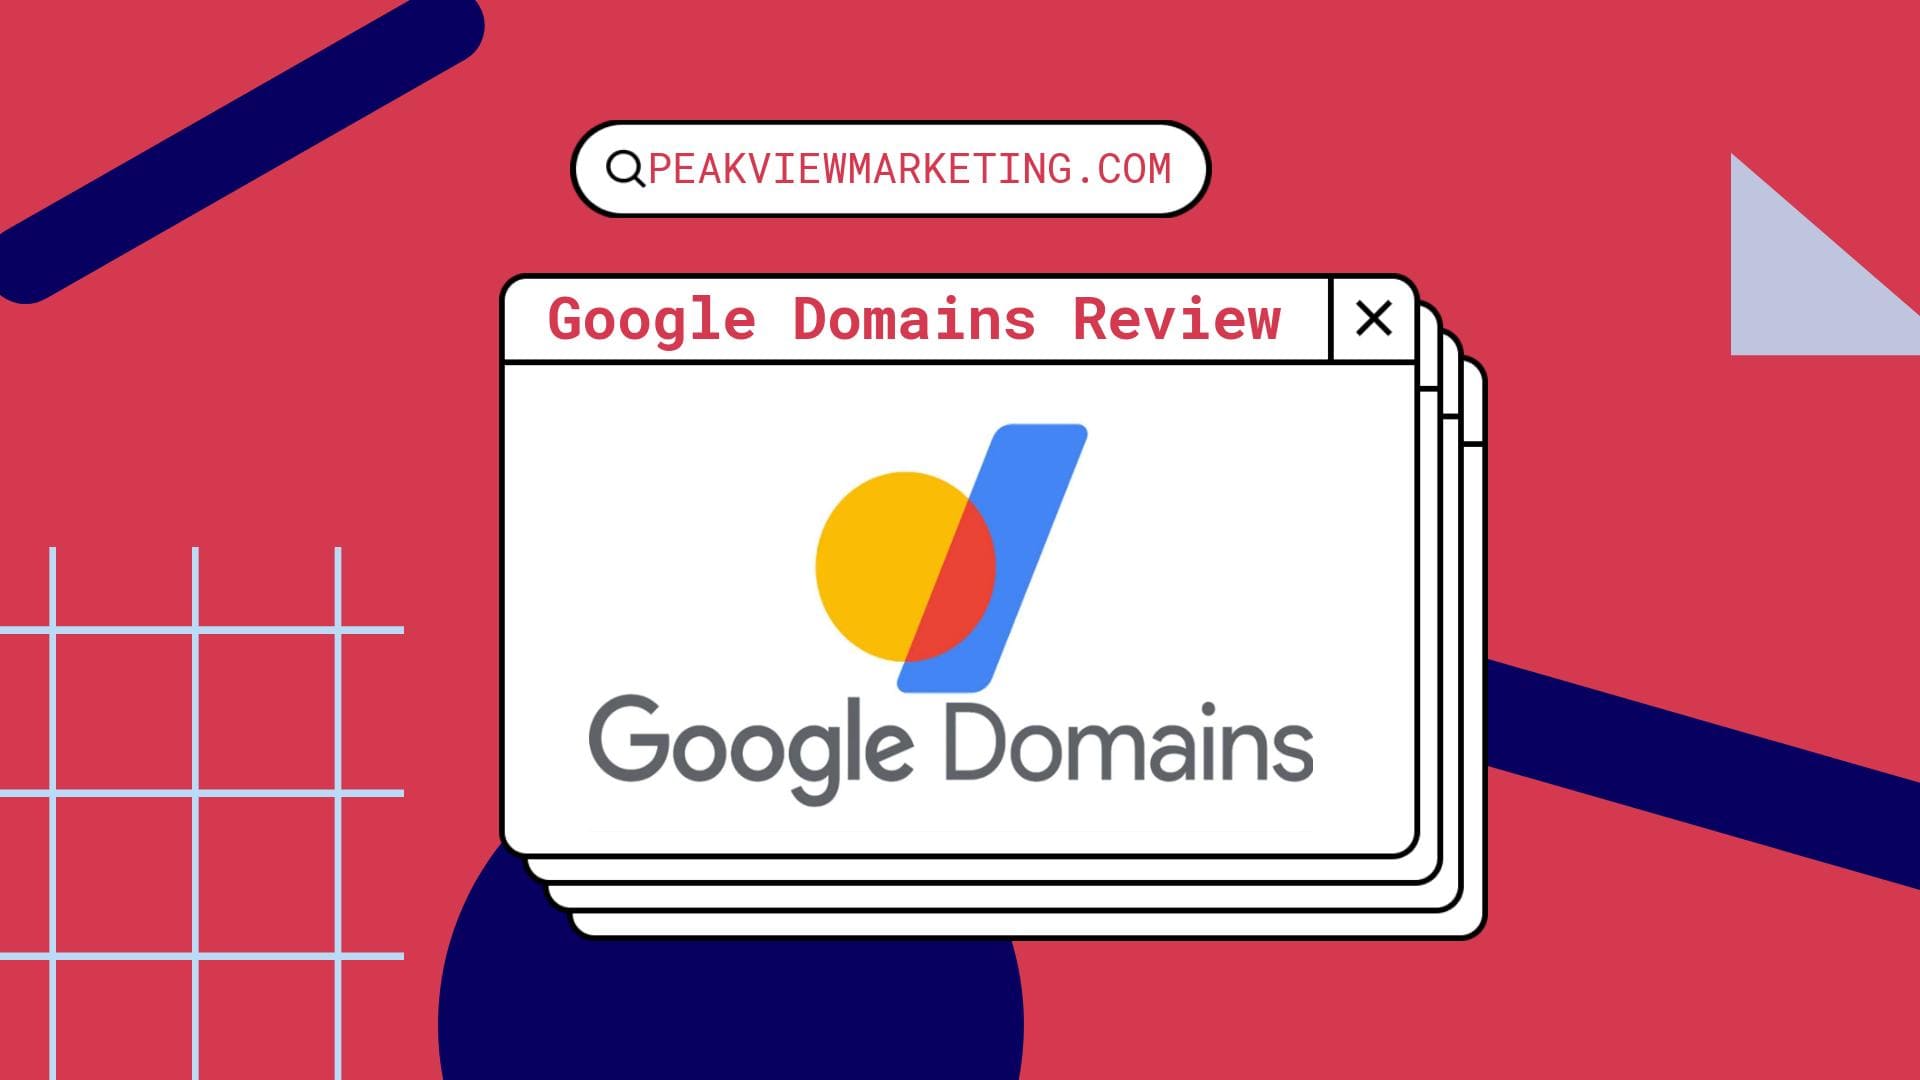 Google Domains Review Image